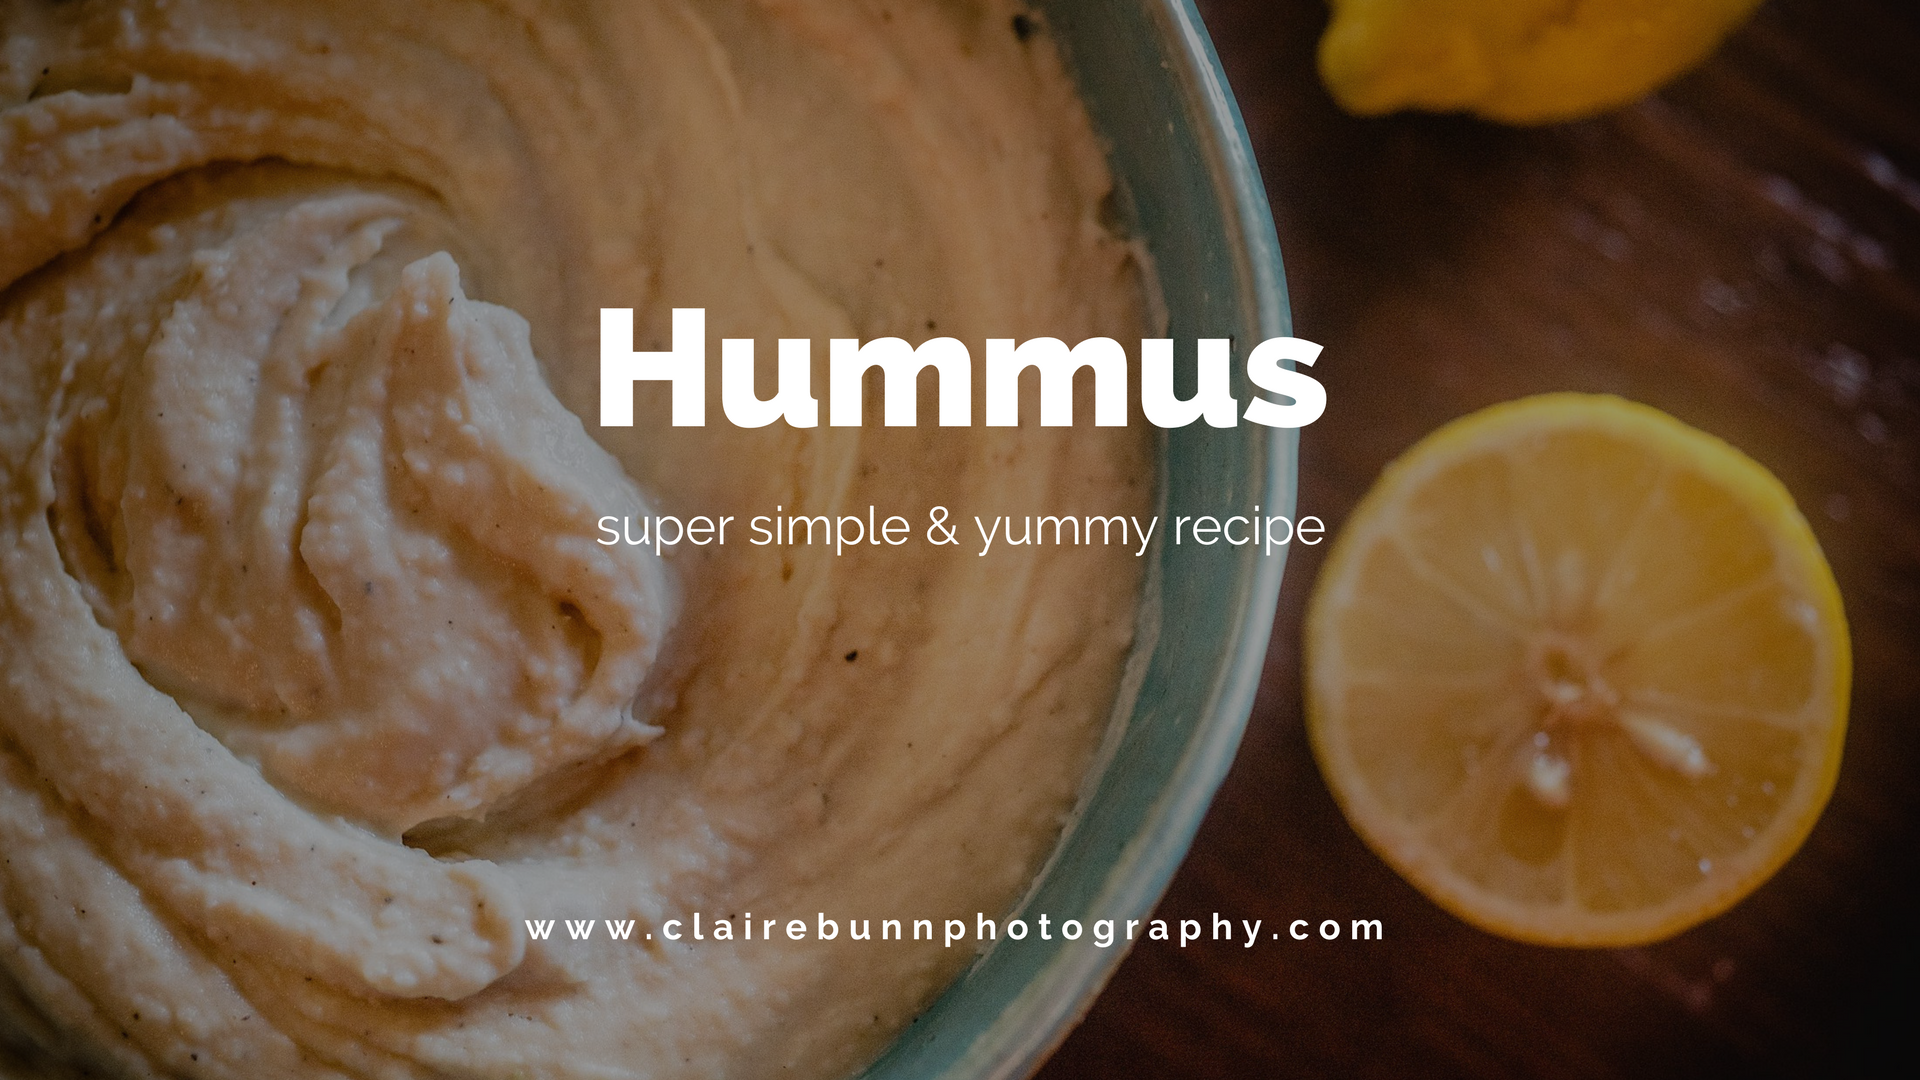 Super simple and yummy hummus recipe